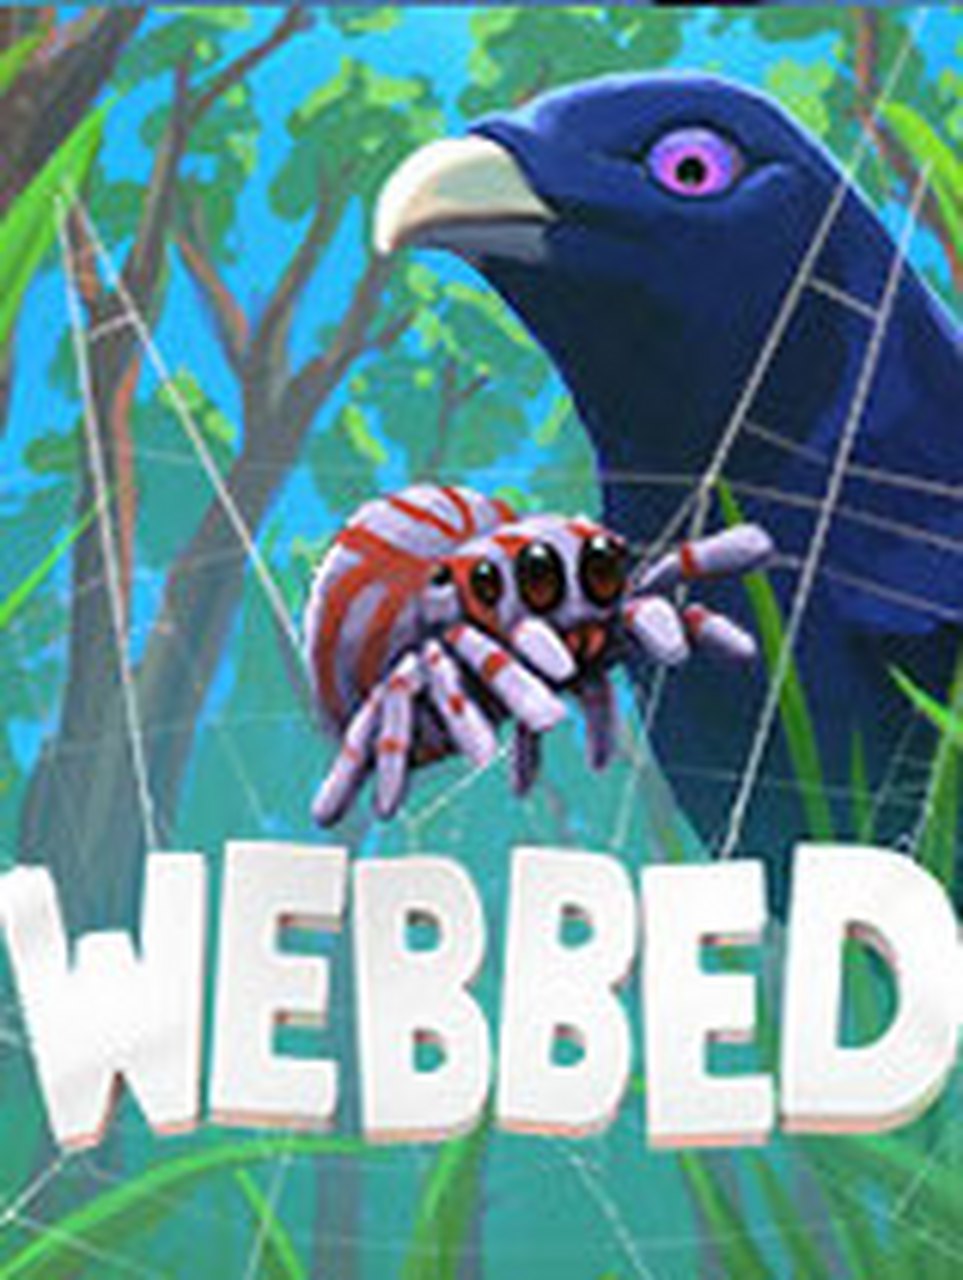 《webbed》 在《webbed》中化身成为一只小蜘蛛,体验在树枝间摇荡,织